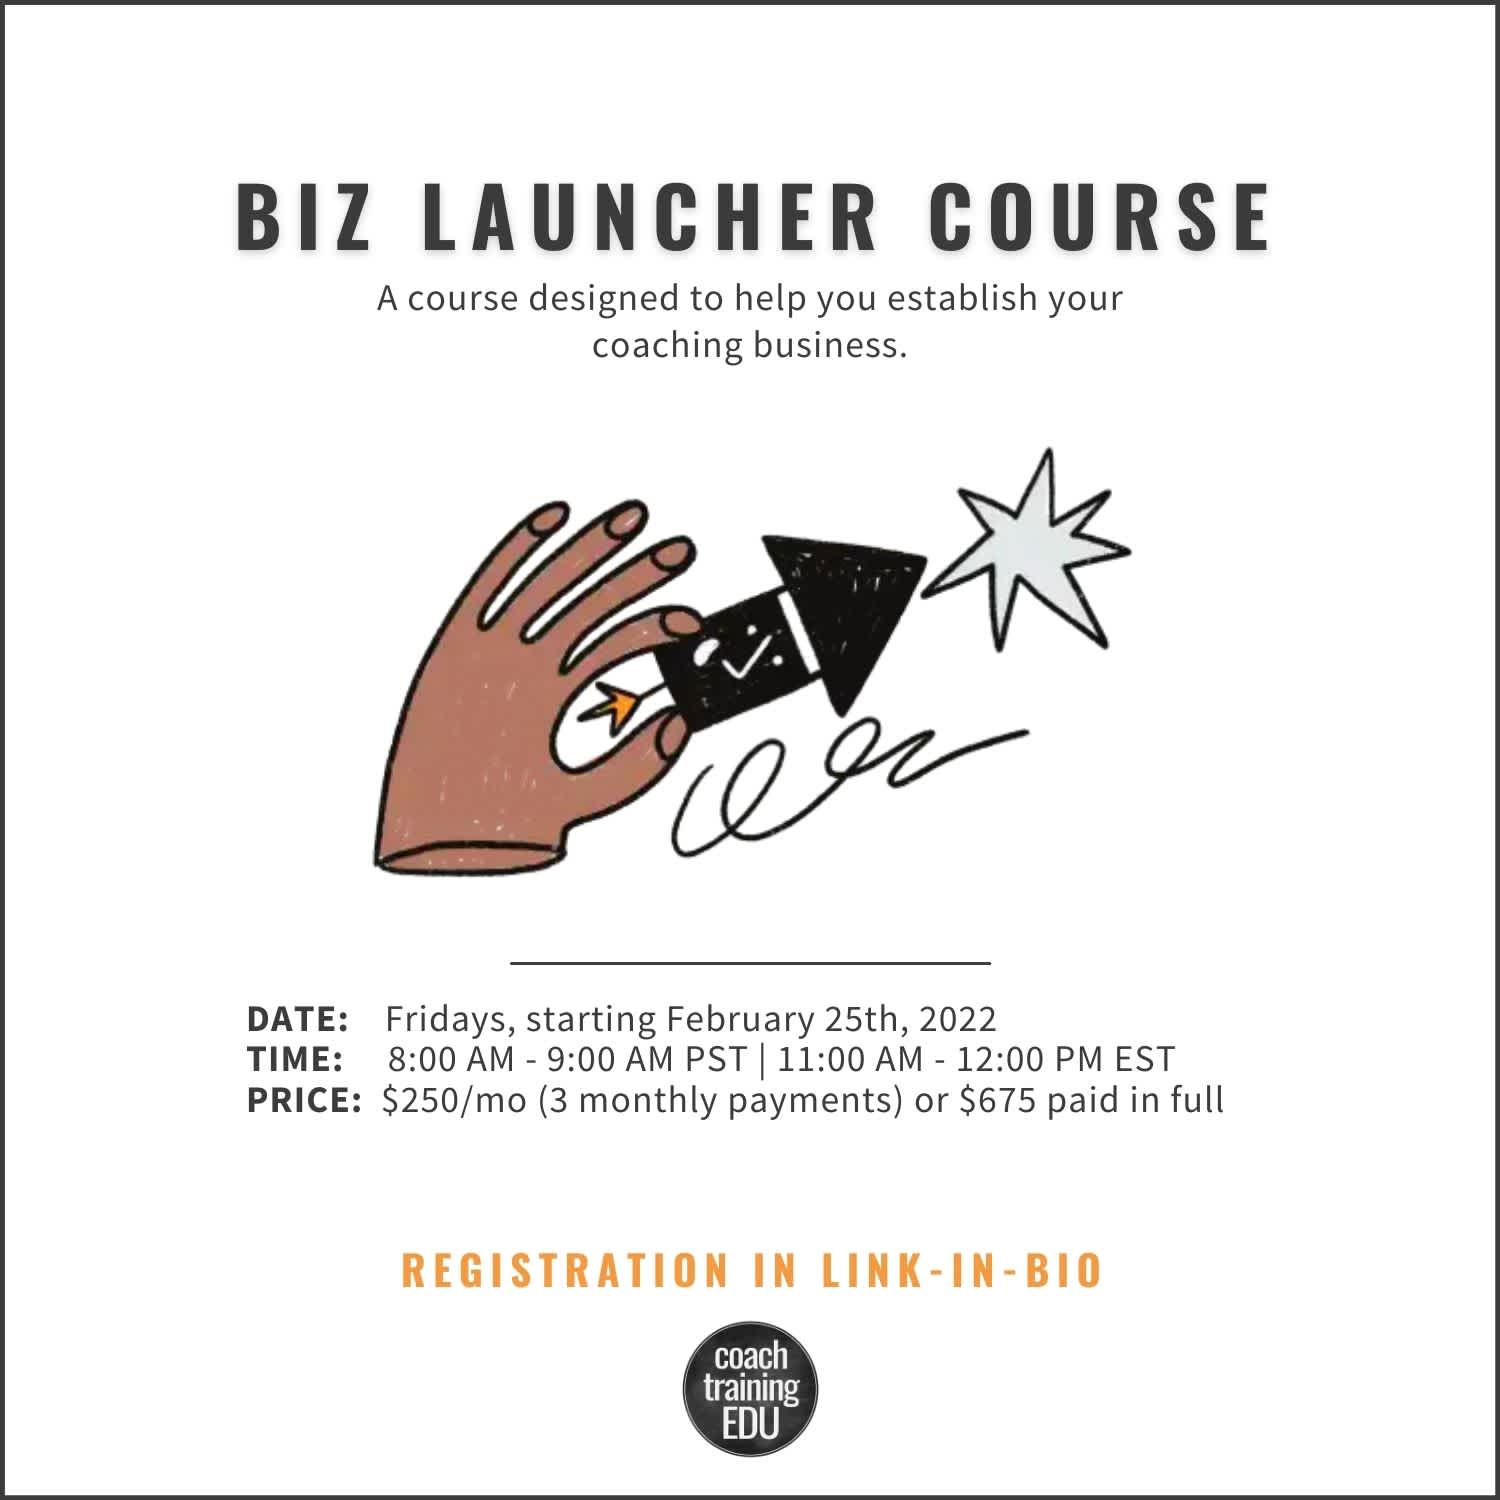 Biz Launcher Course Starts February 25th!